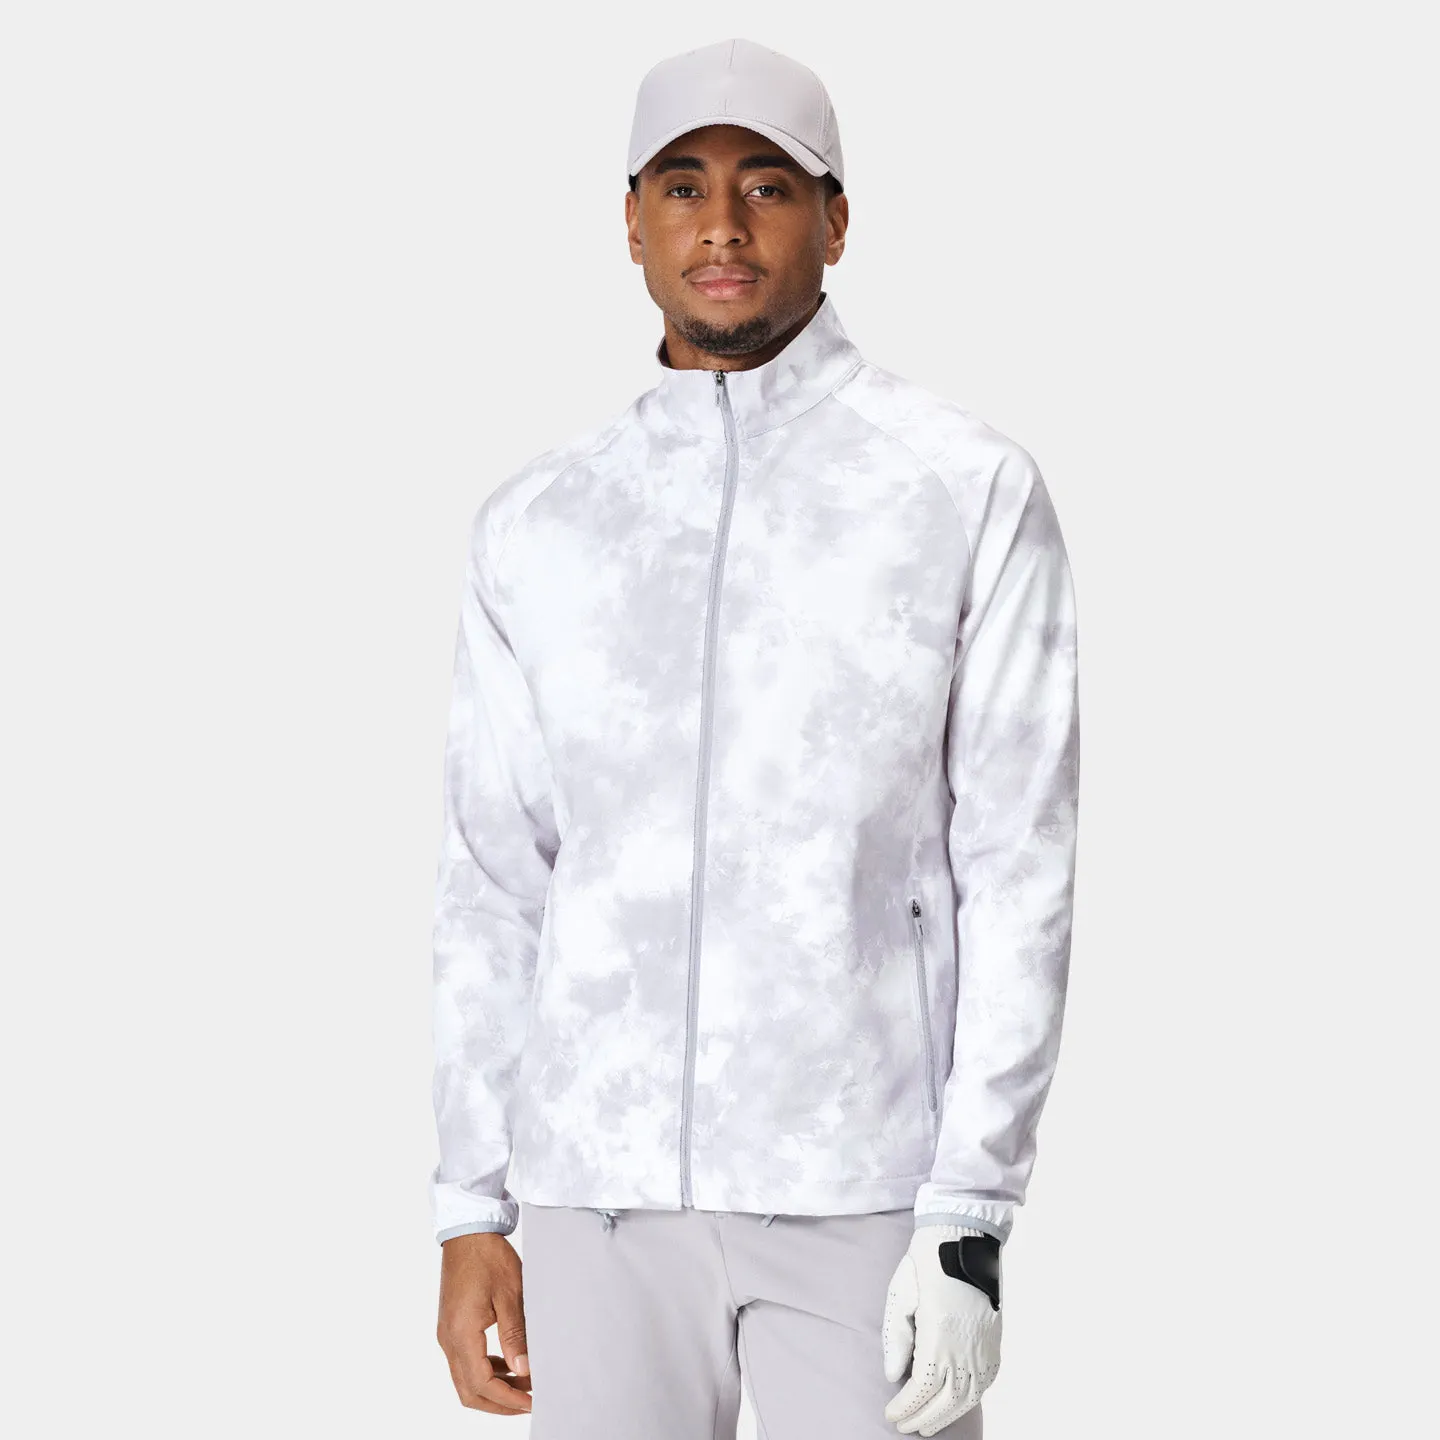 Personalizado zip completo leve 100% poliéster windbreaker impermeável esporte atlético 4-way stretch tie dye vento jaqueta de golfe para homens